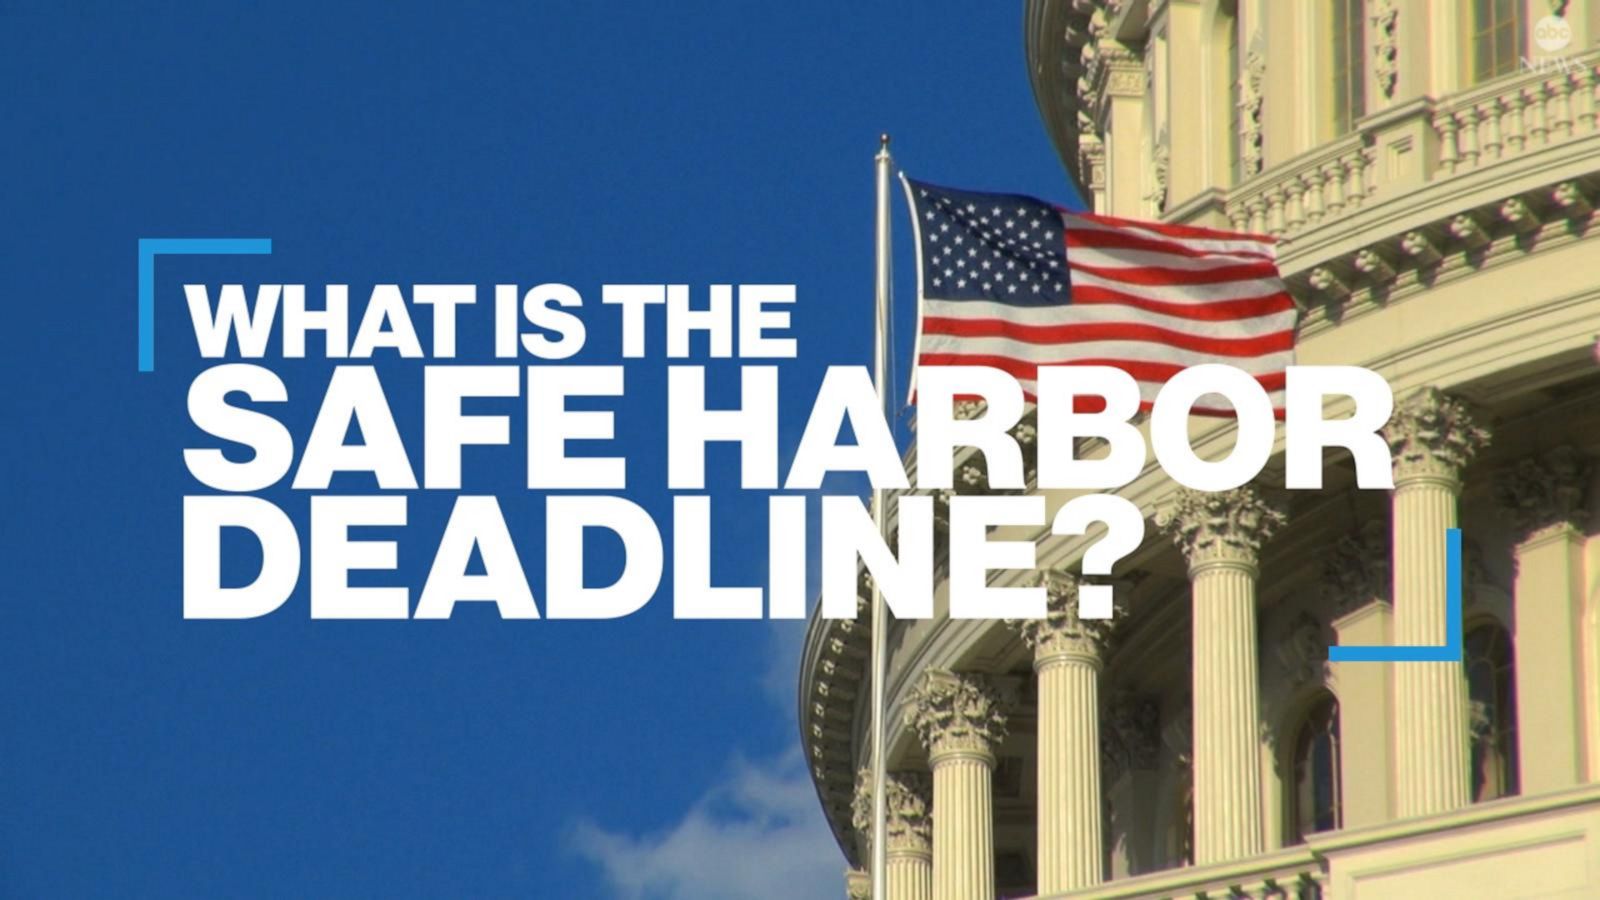 What is the safe harbor deadline? Good Morning America